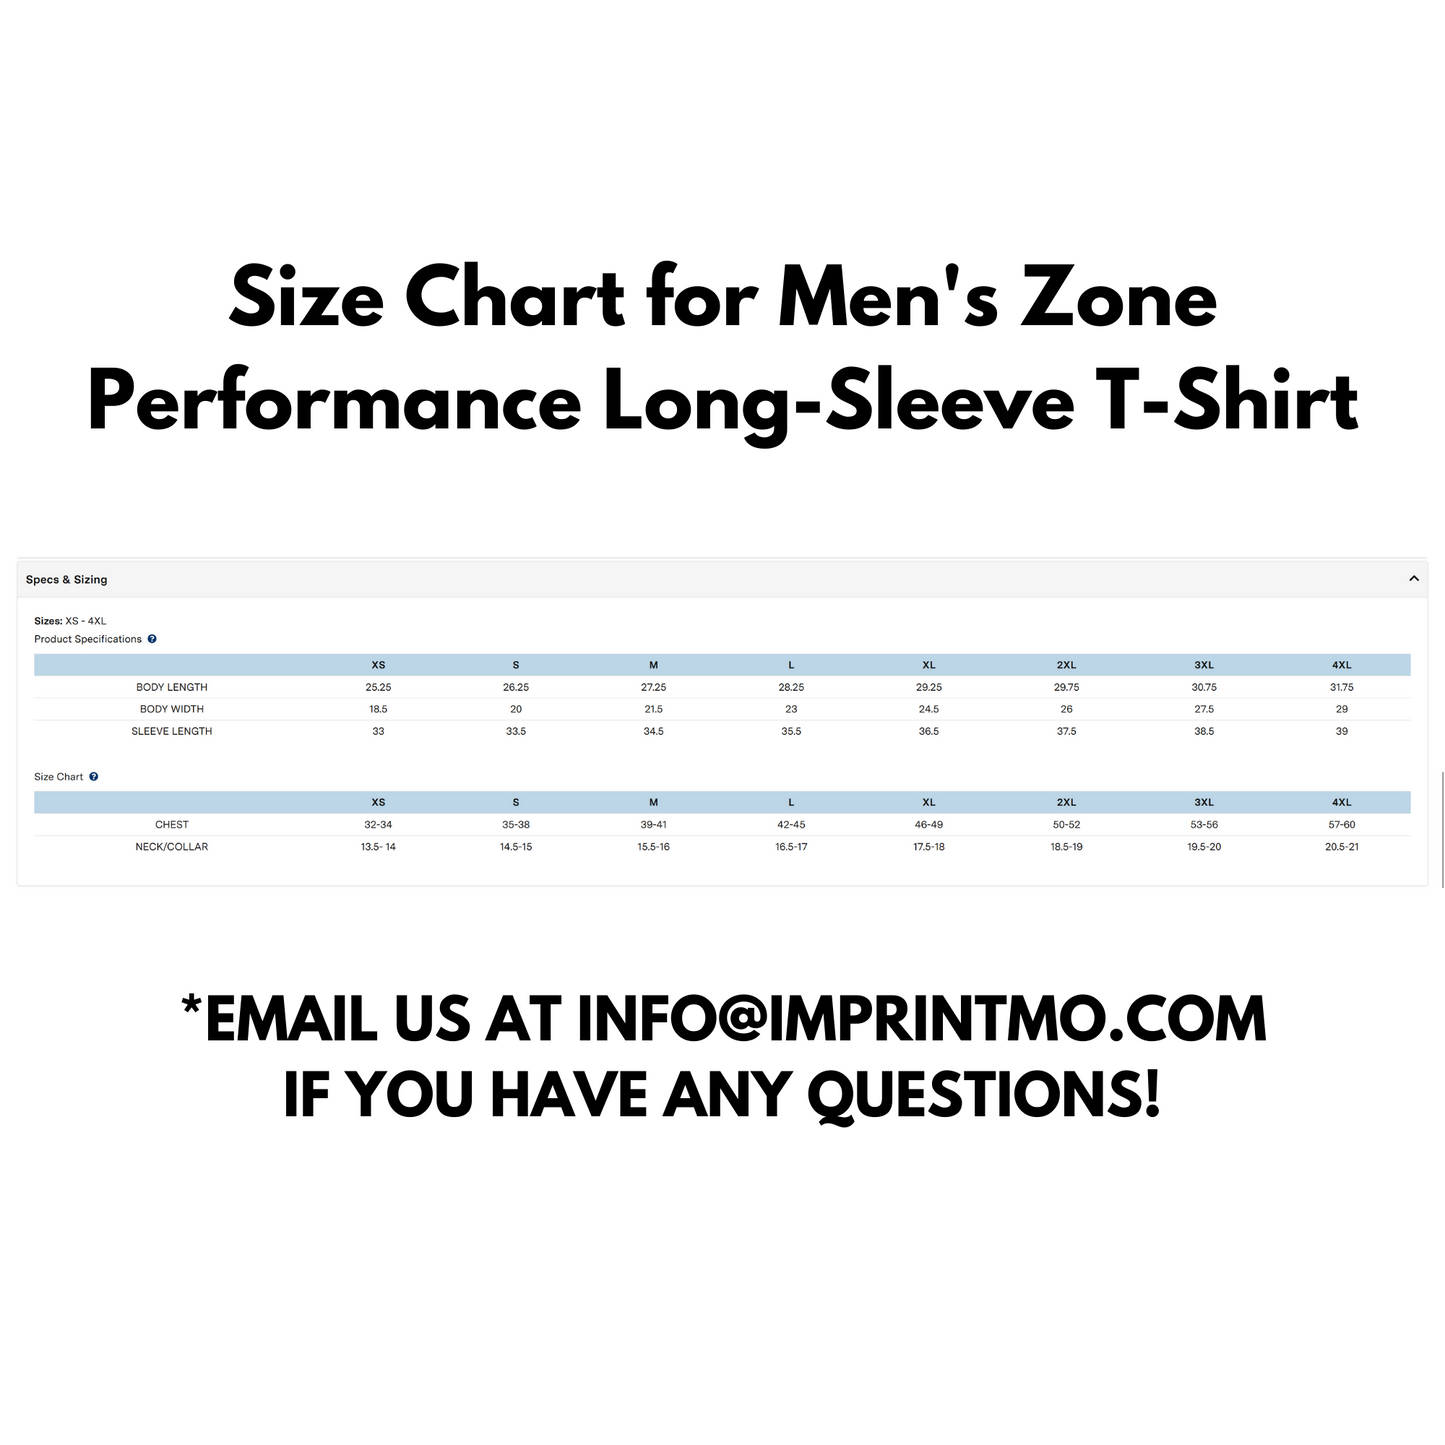 Sport Forest Team 365 Men's Zone Performance Long-Sleeve T-Shirt